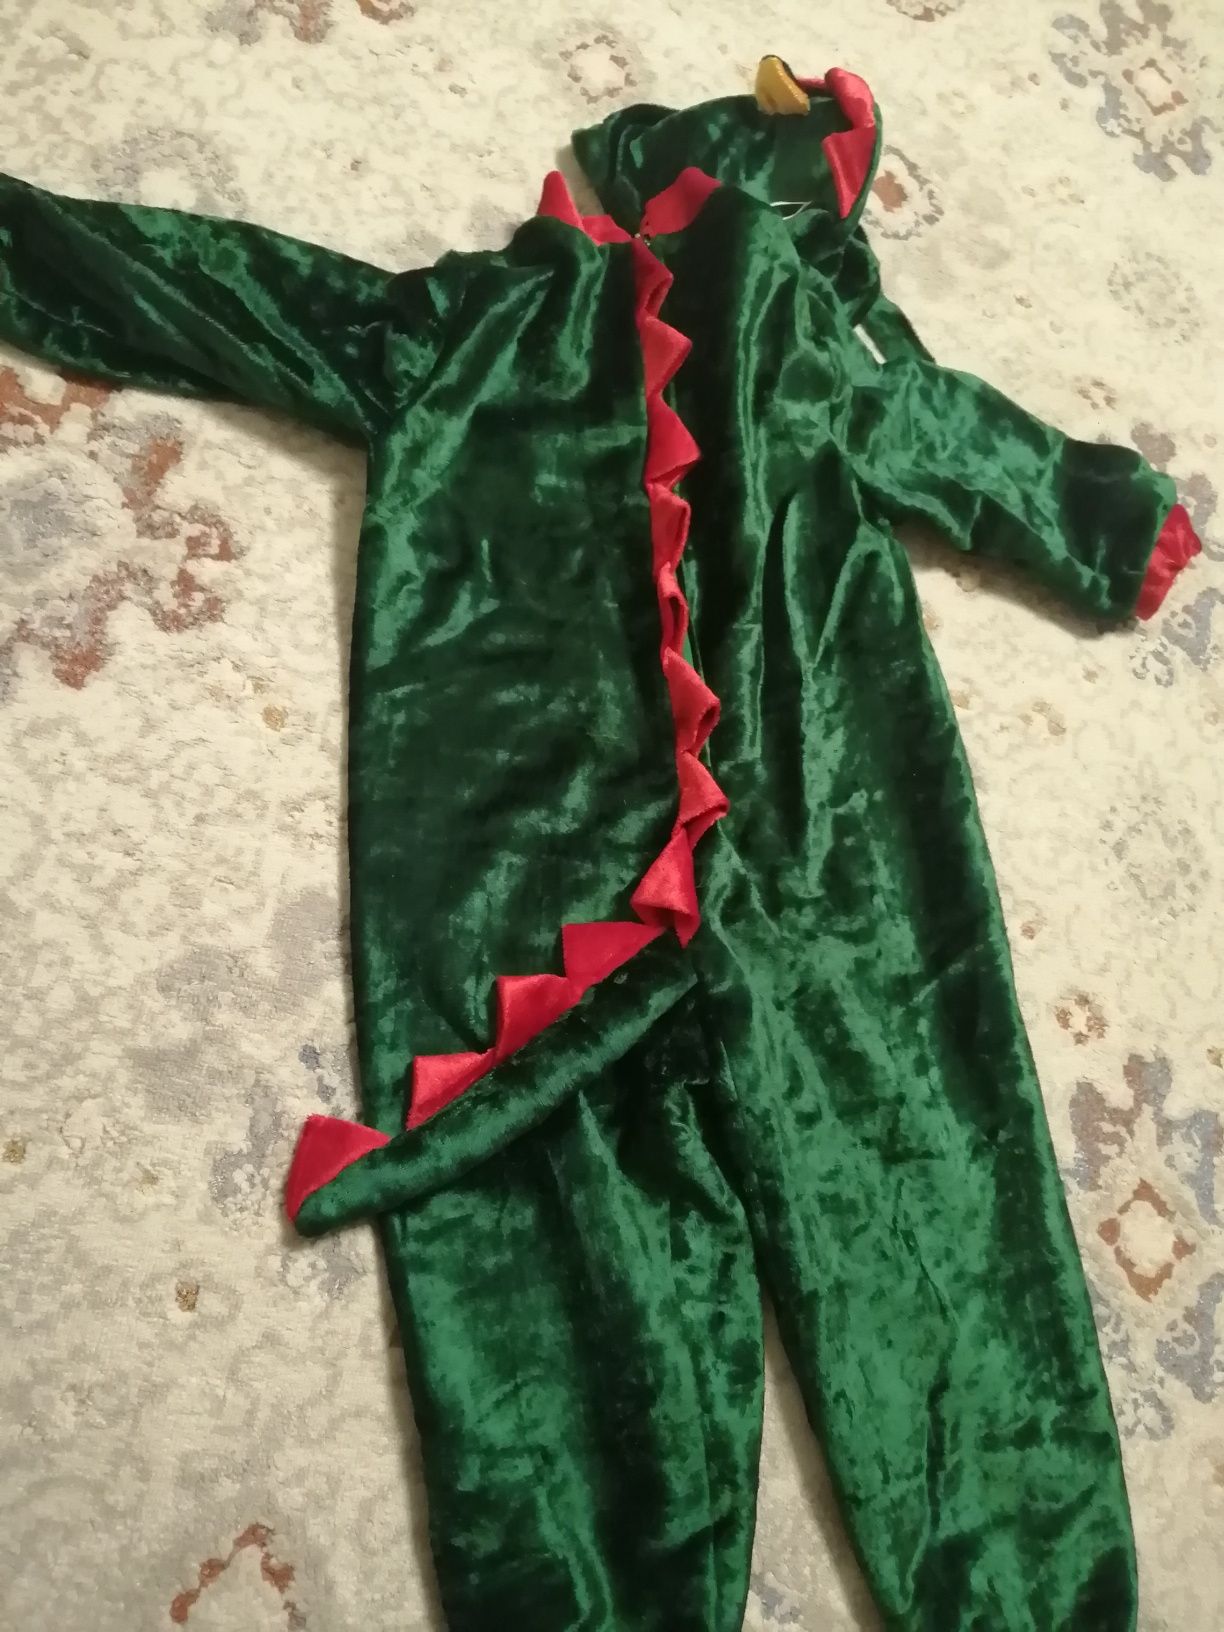 Детский костюм динозавра (дракоша)